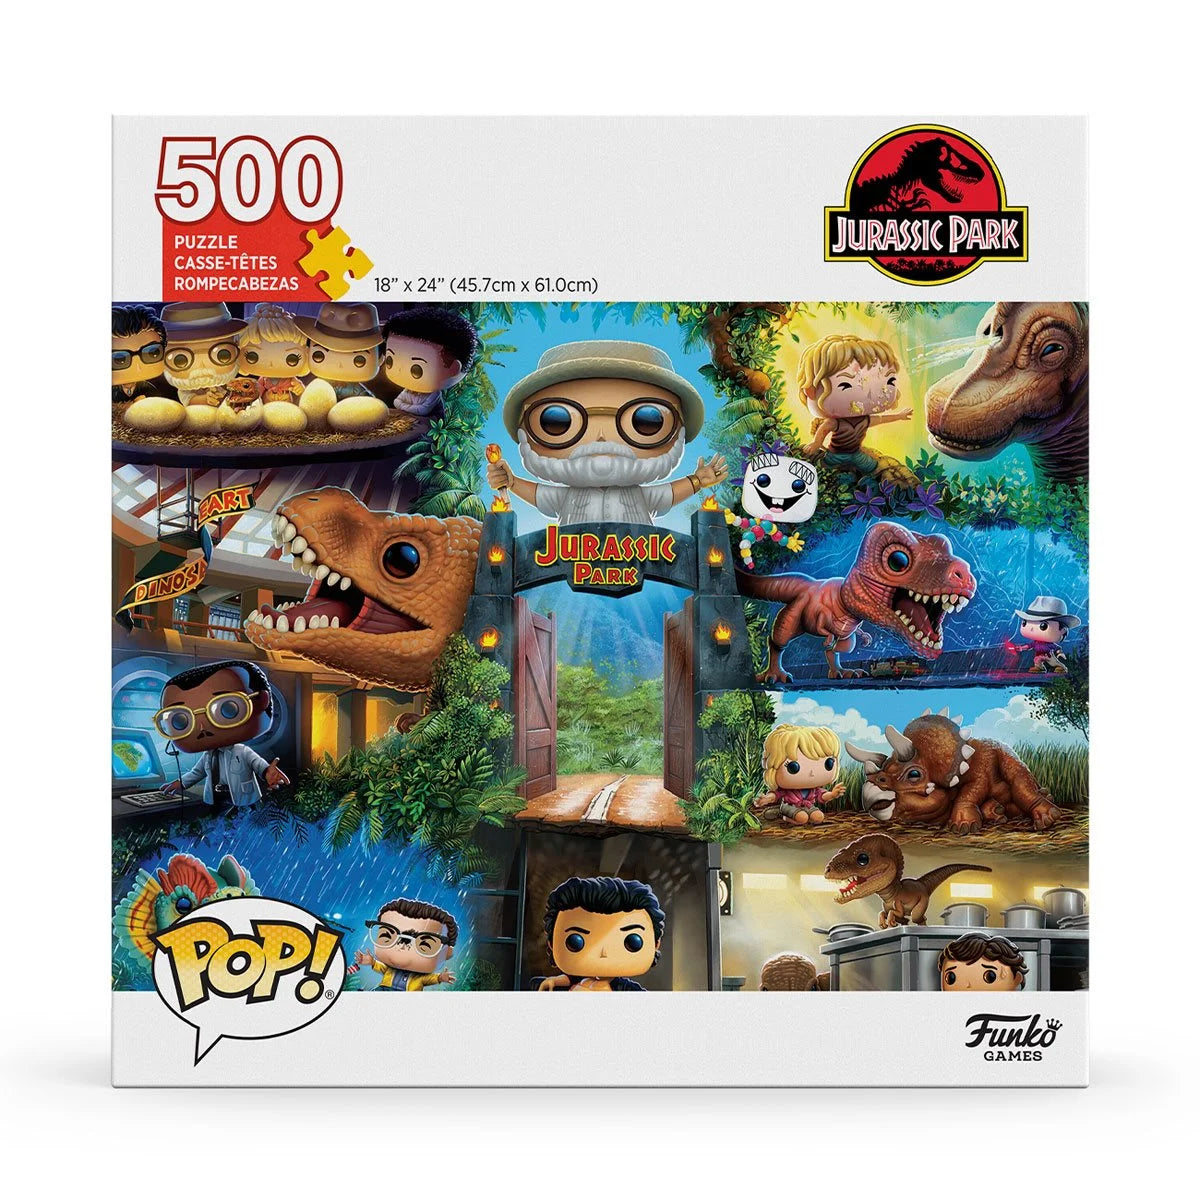 Jurassic Park 500-Piece Funko Pop! Puzzles